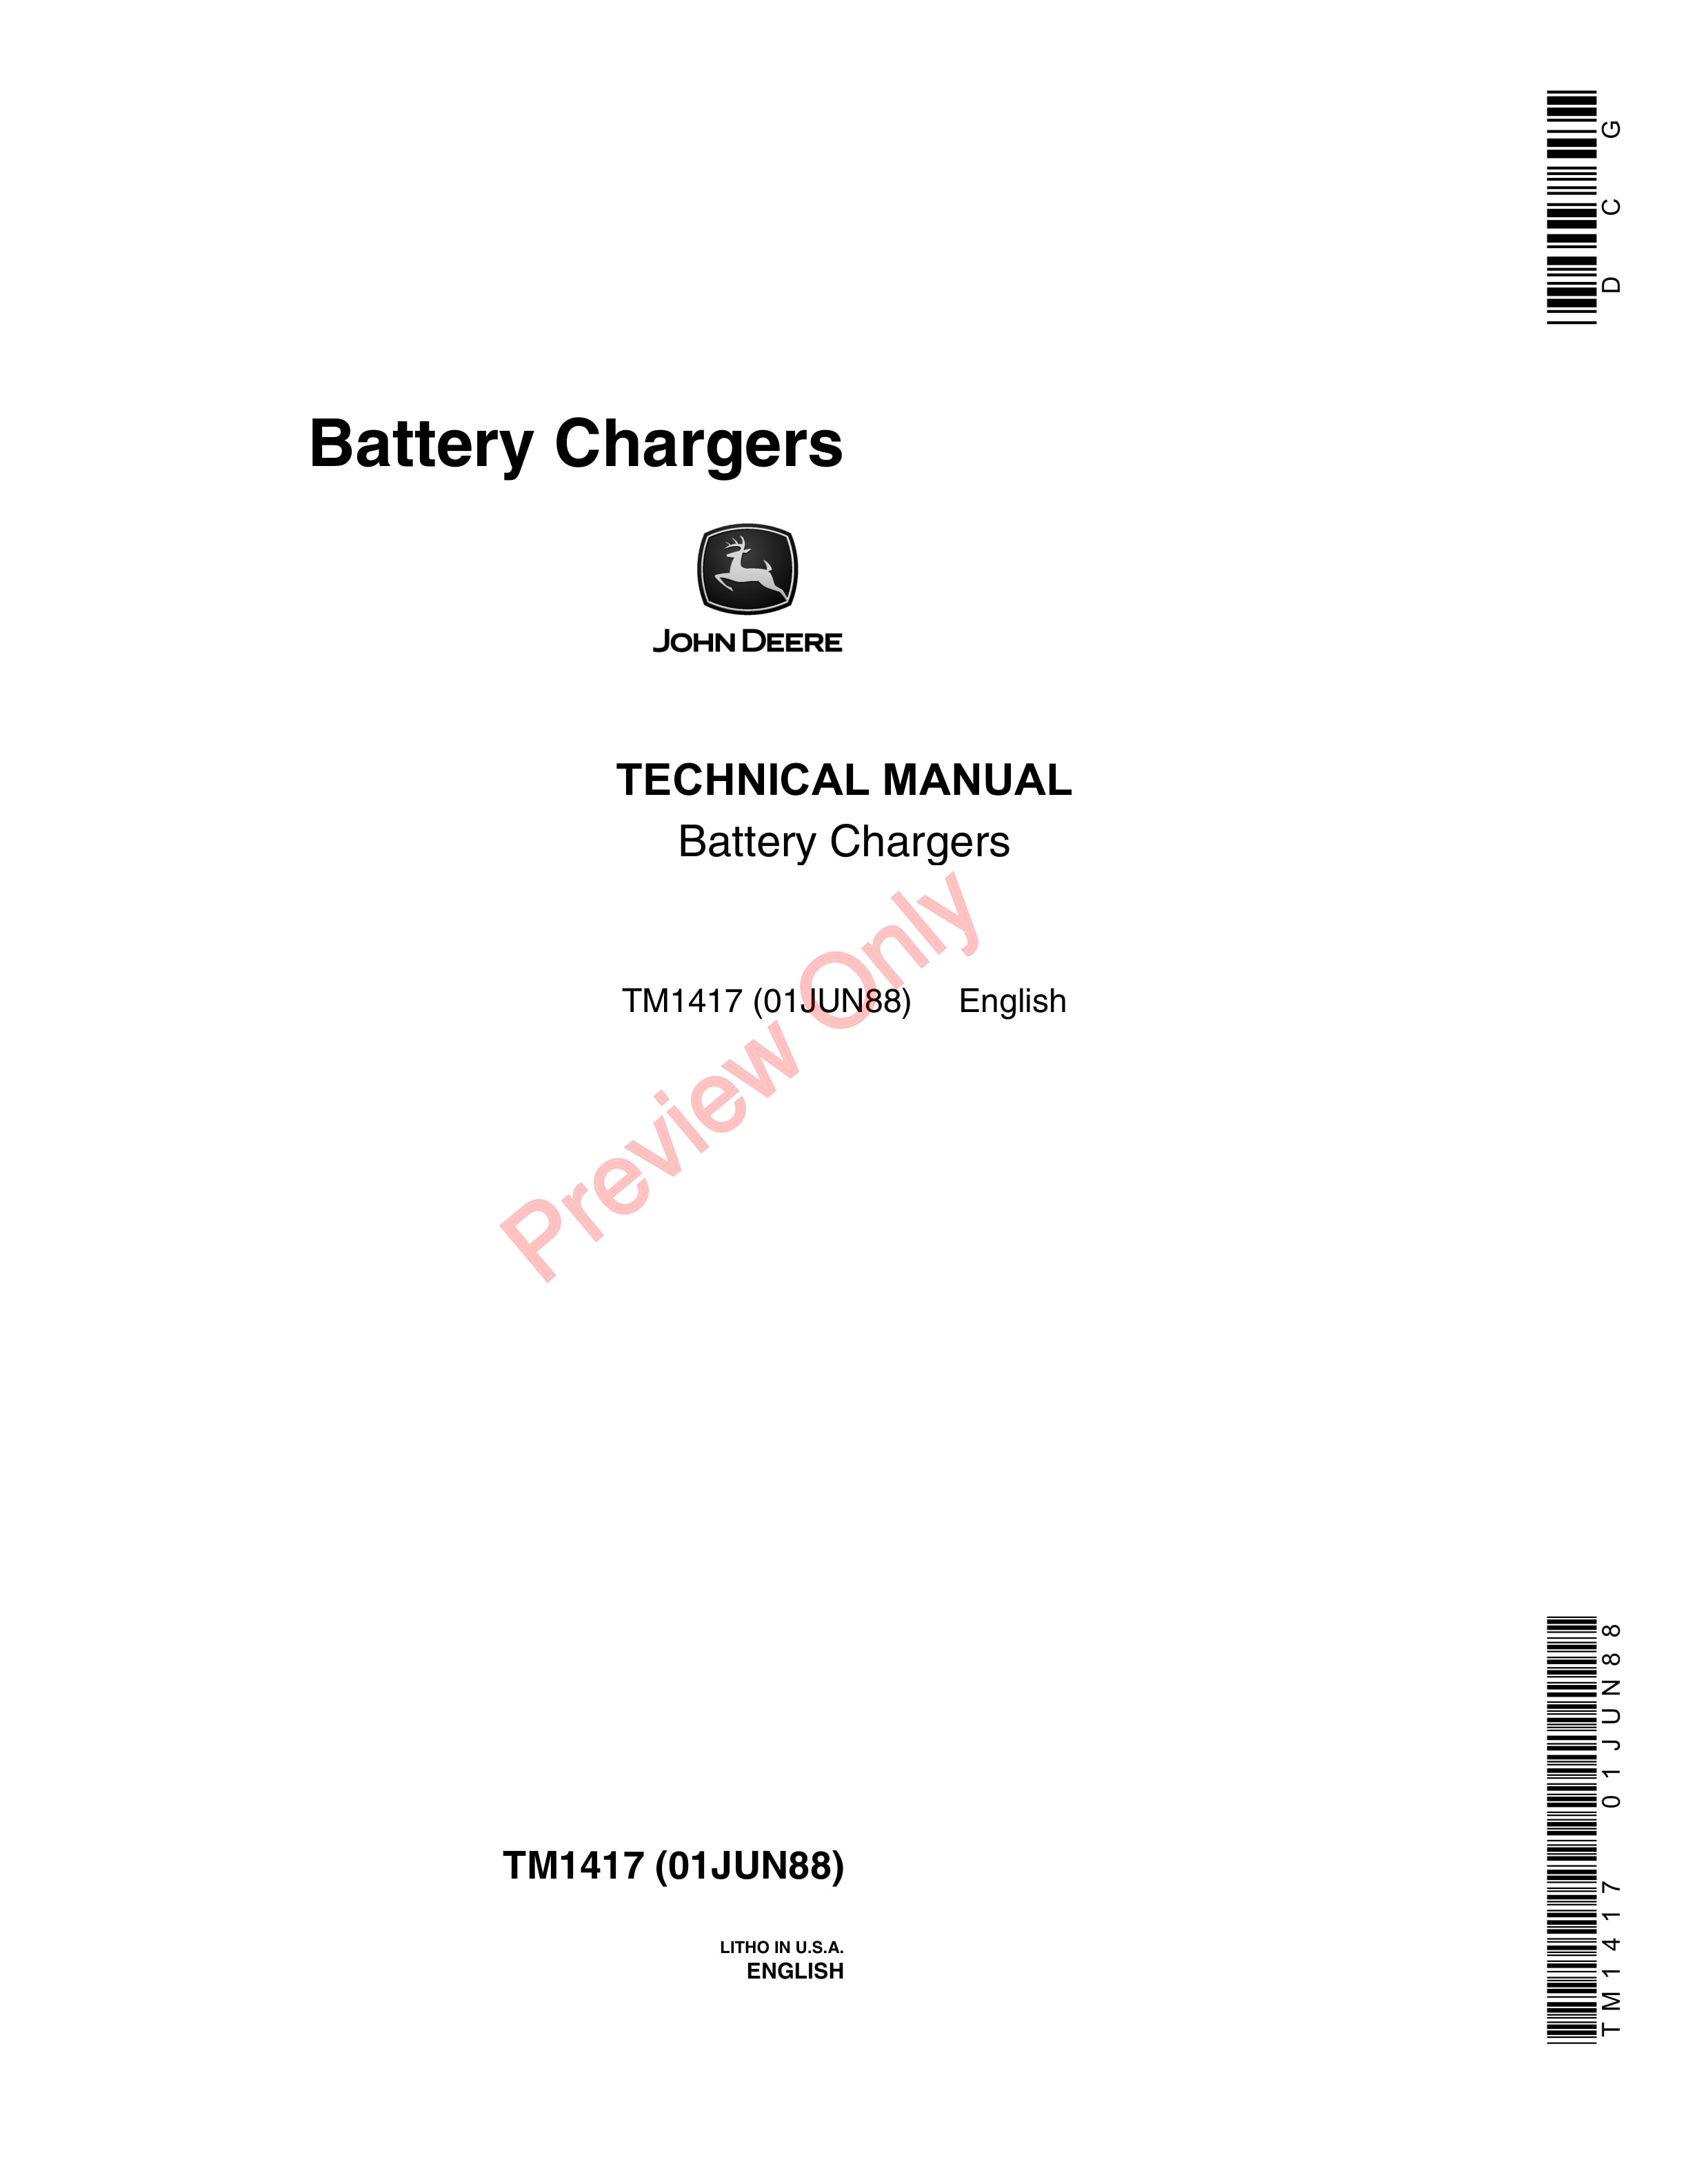 John Deere 152 Amp 302 Amp 60402 AMP Battery Charger Technical Manual TM1417 01JUN88 1